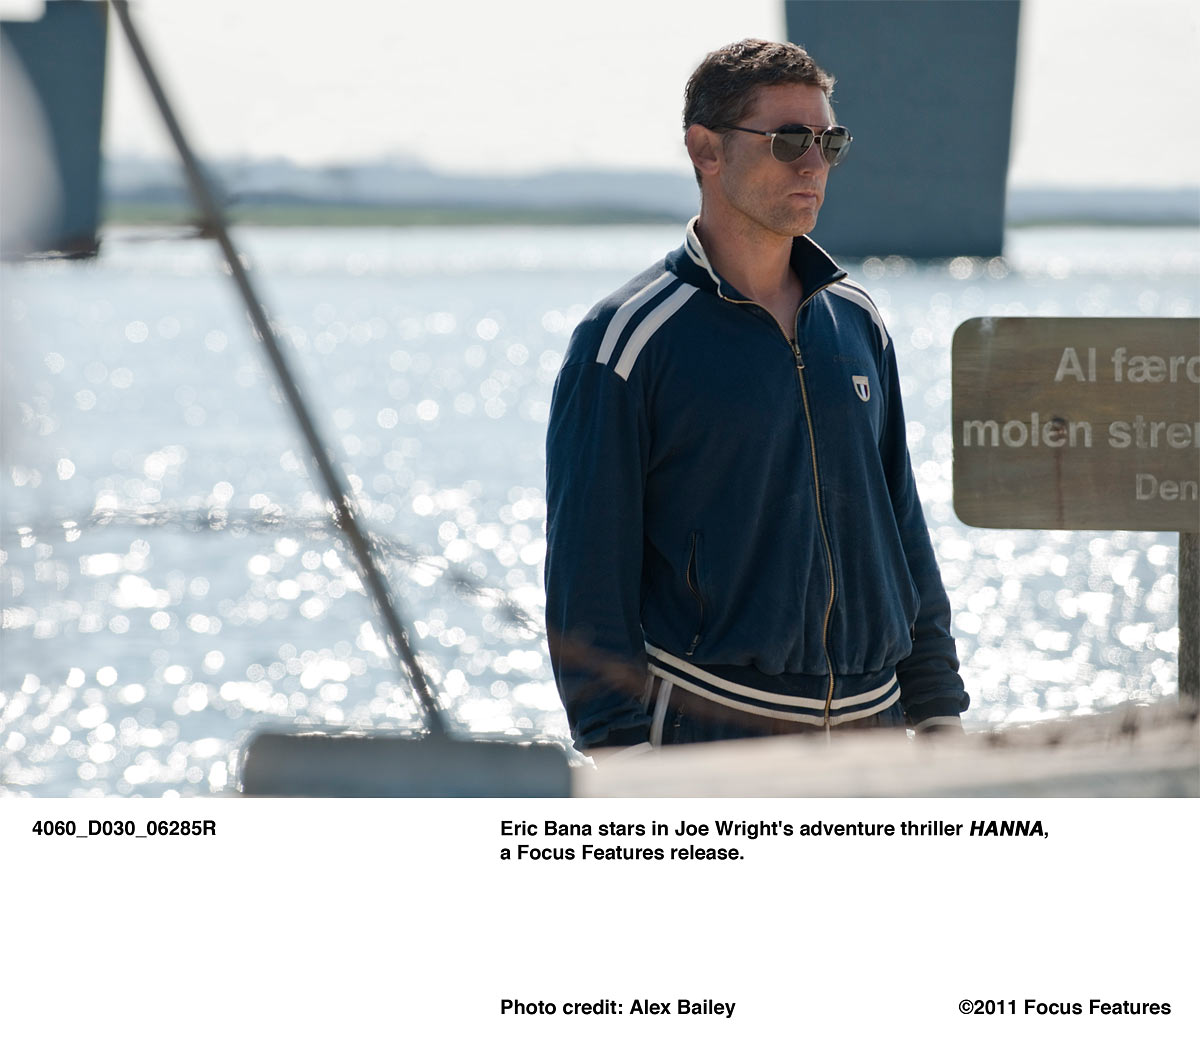 Eric Bana stars in Joe Wright's adventure thriller HANNA, a Focus Features release. Photo credit: Alex Bailey.